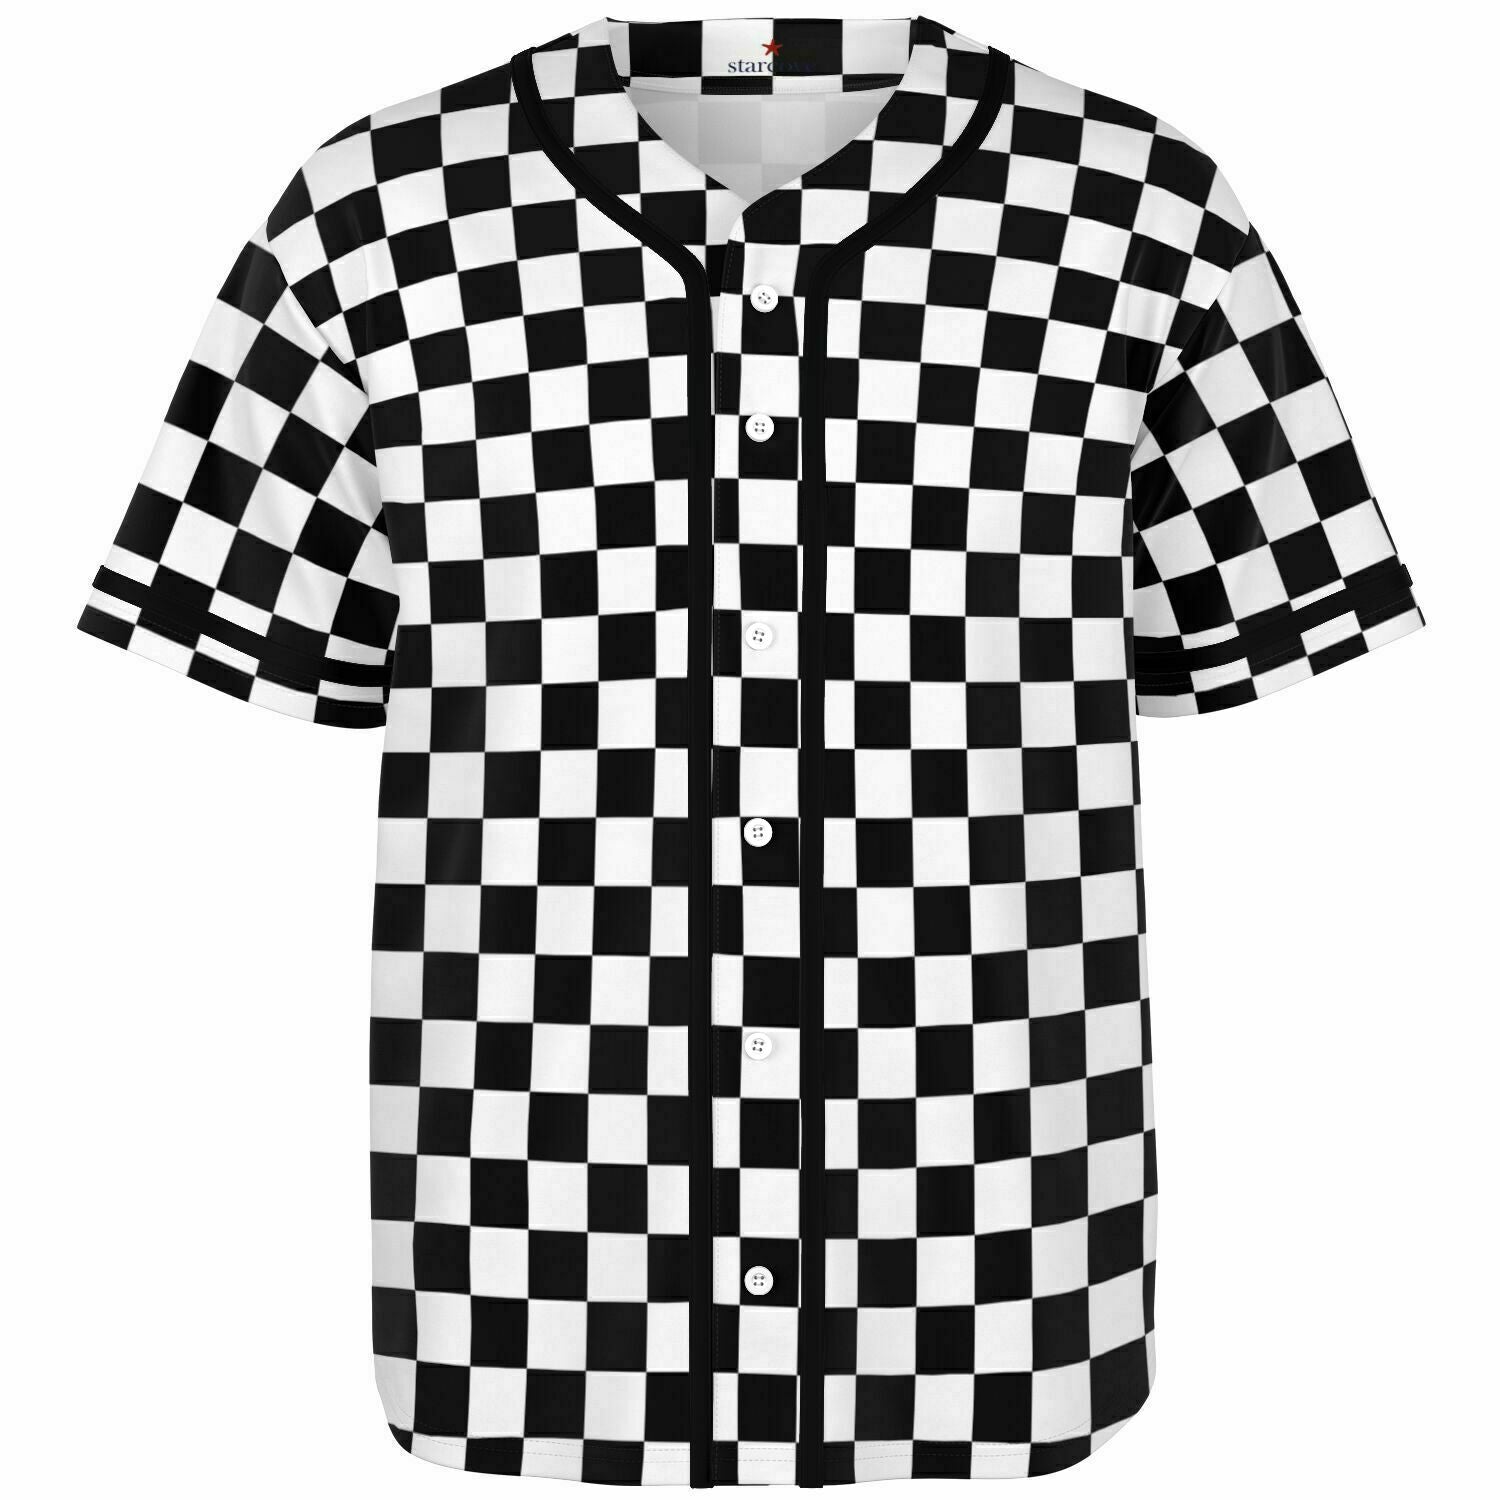 Checkered Baseball Jersey Shirt, Black White Check Men Women Unisex Vintage Season Coach Player Moisture Wicking Tshirt XL